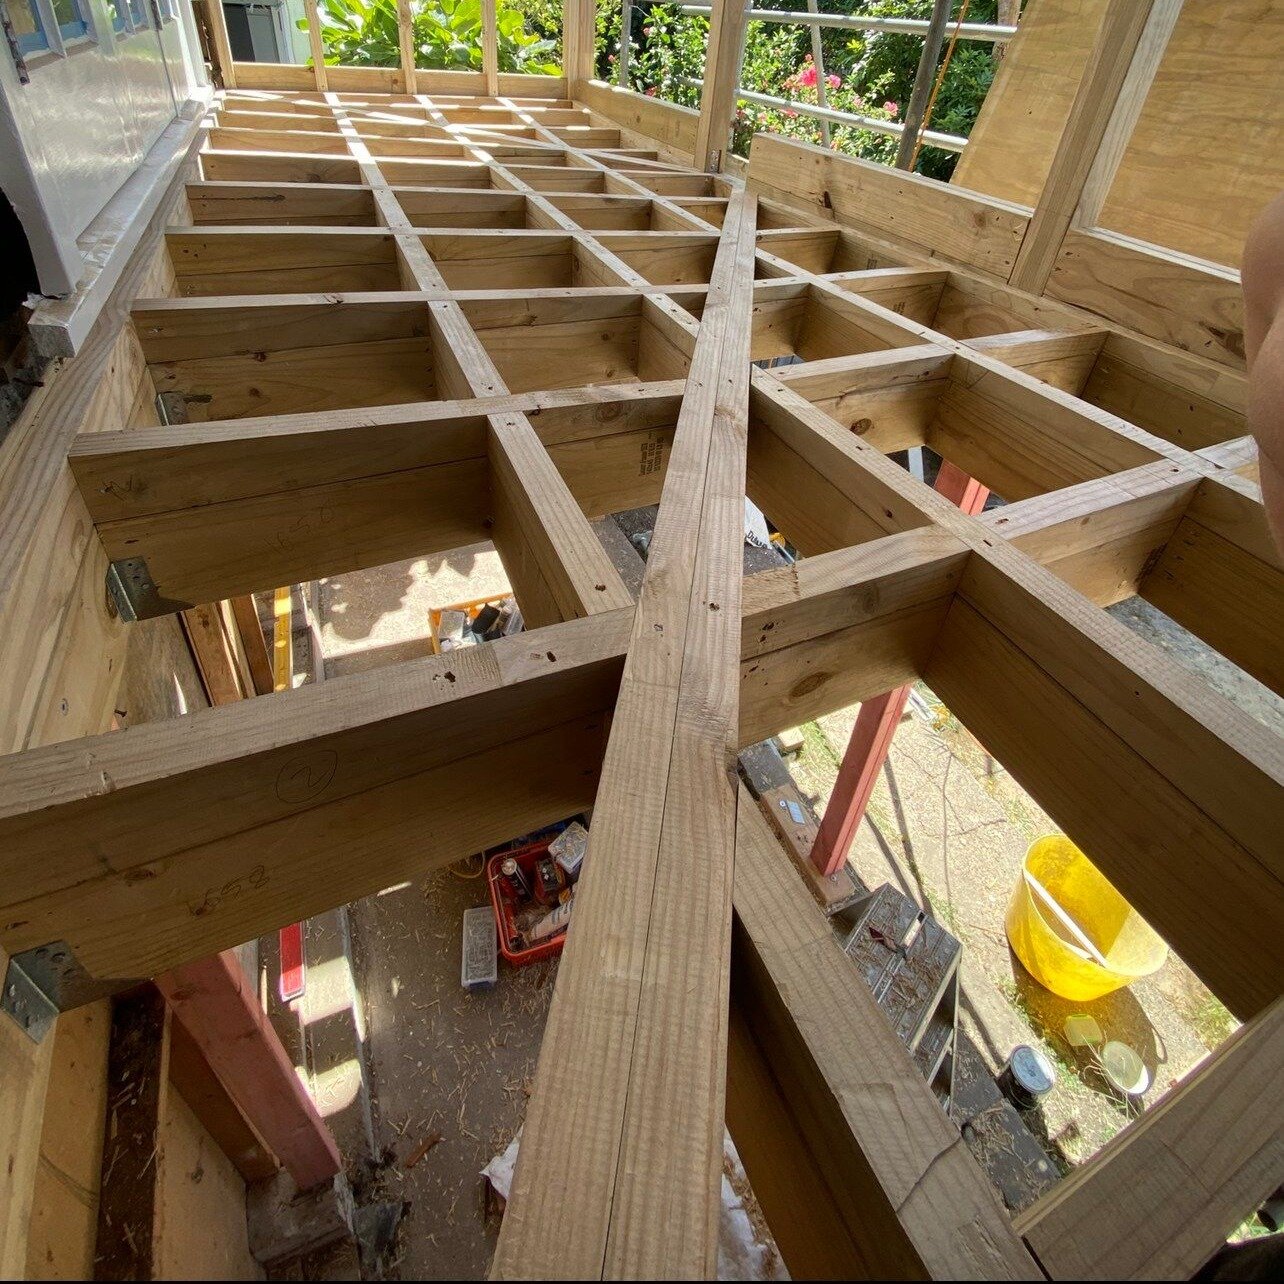 Deck framing looking sharp #building #aucklandnz